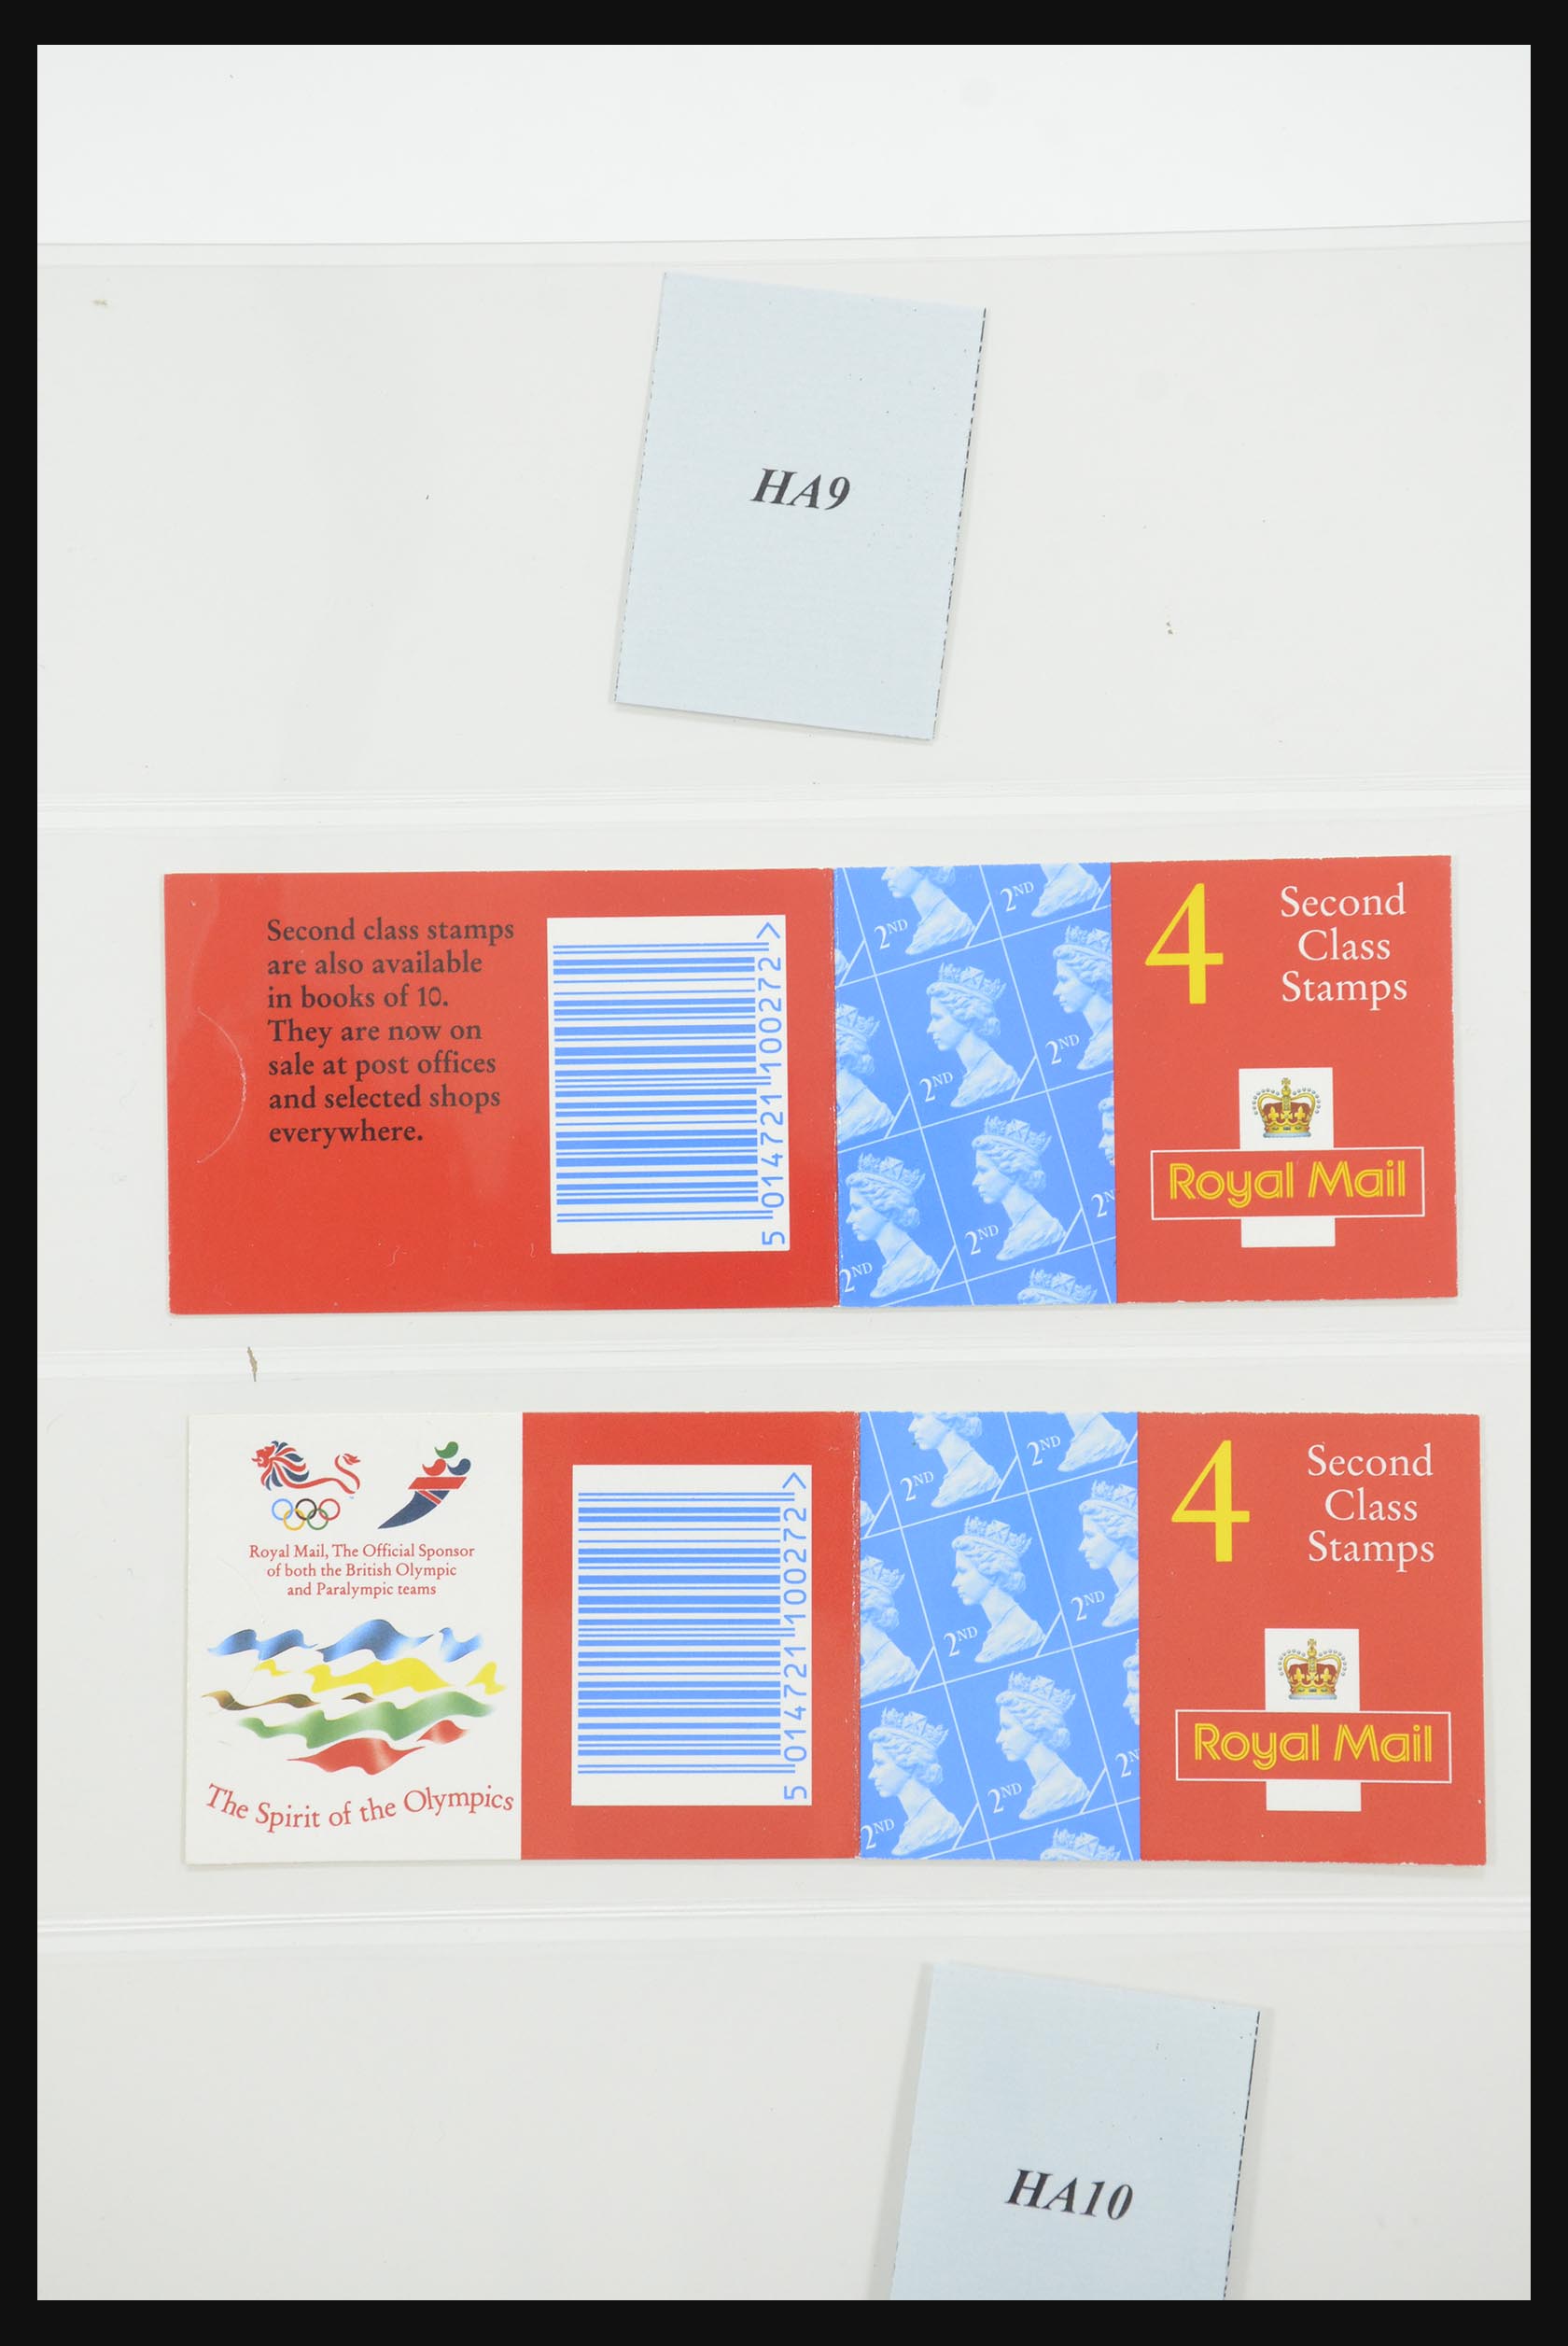 31960 015 - 31960 Great Britain stampbooklets 1989-2000.